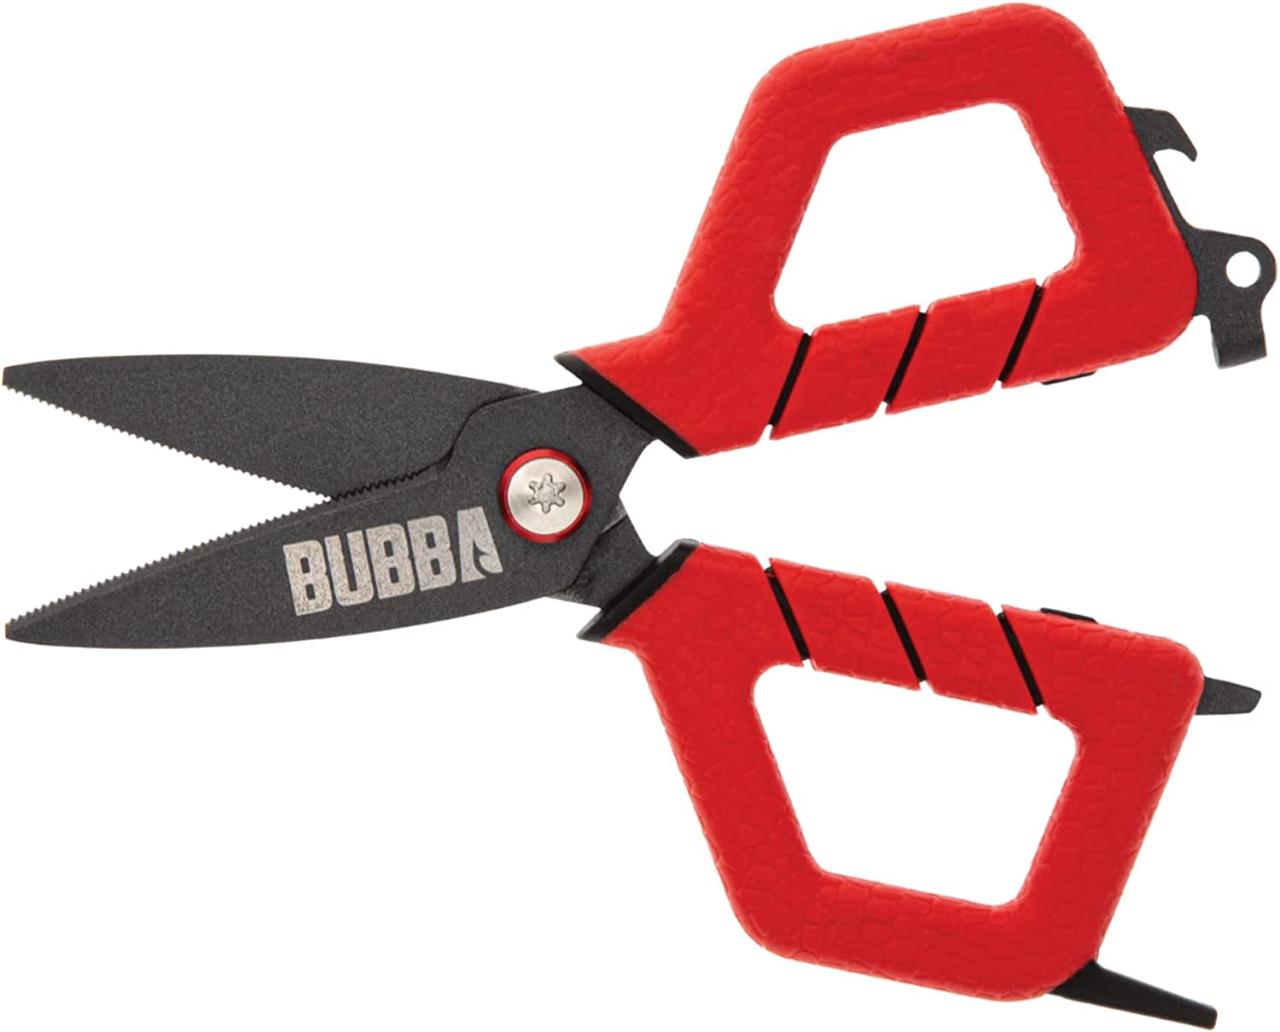 BUBBA Small Shears - Best Braided Scissors